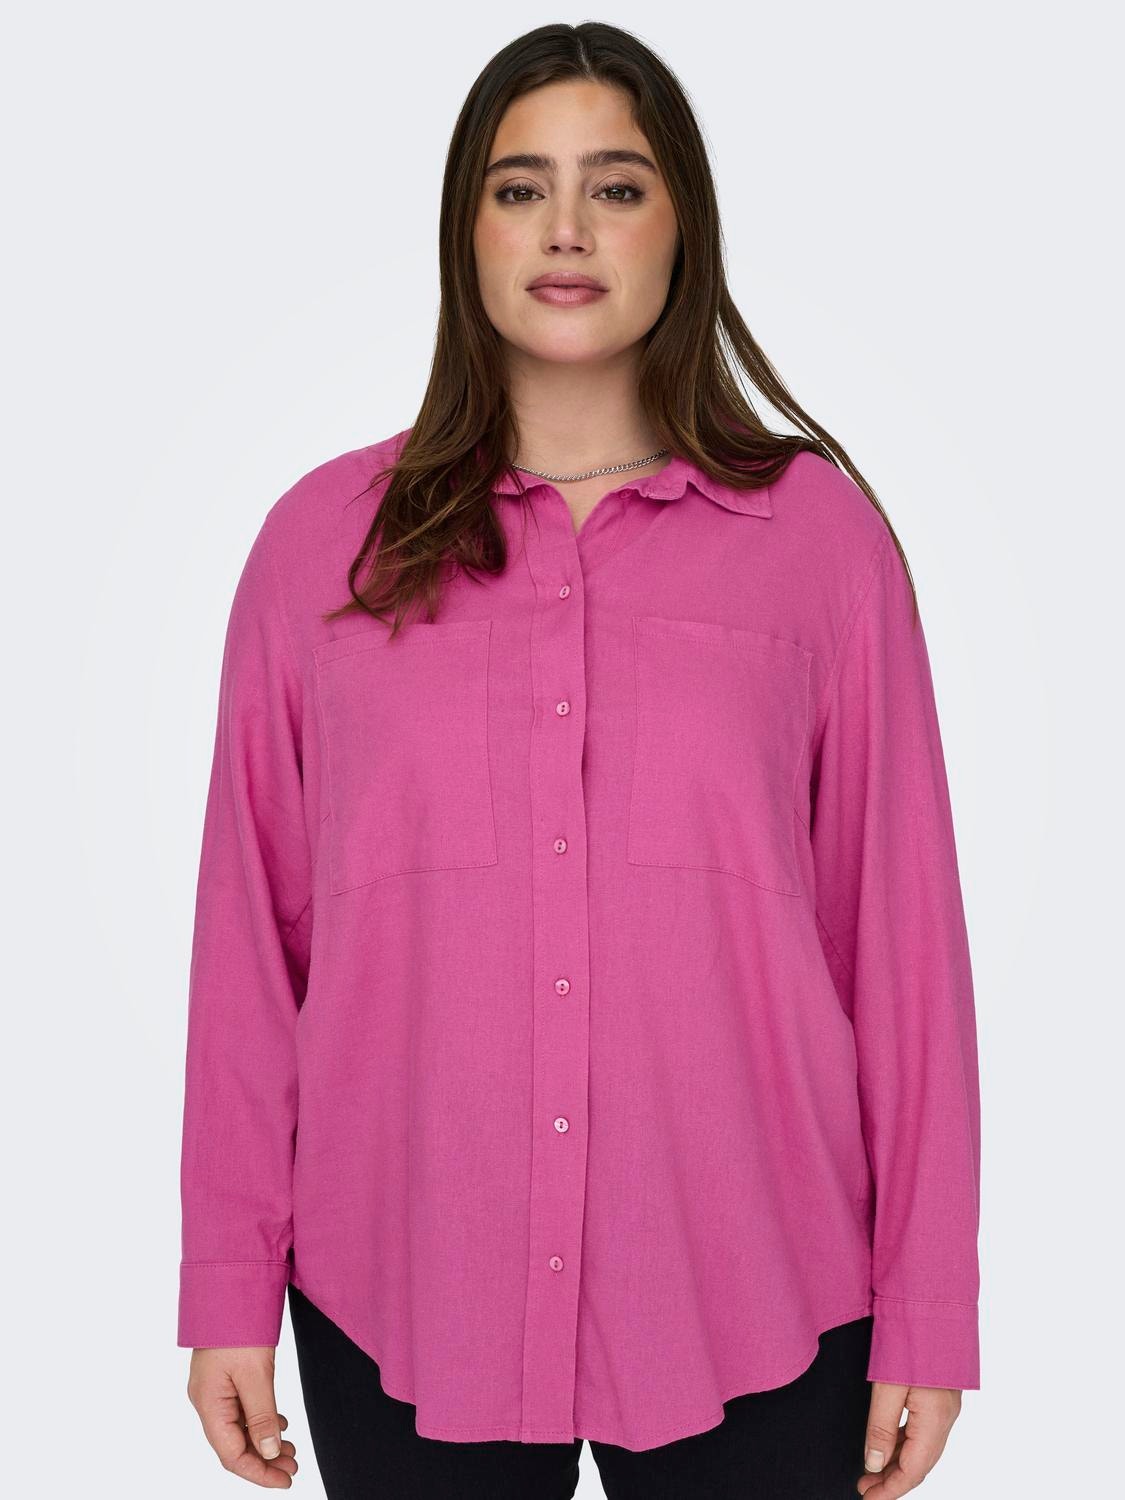 ONLY Curvy Viscose Shirt -Raspberry Rose - 15281041